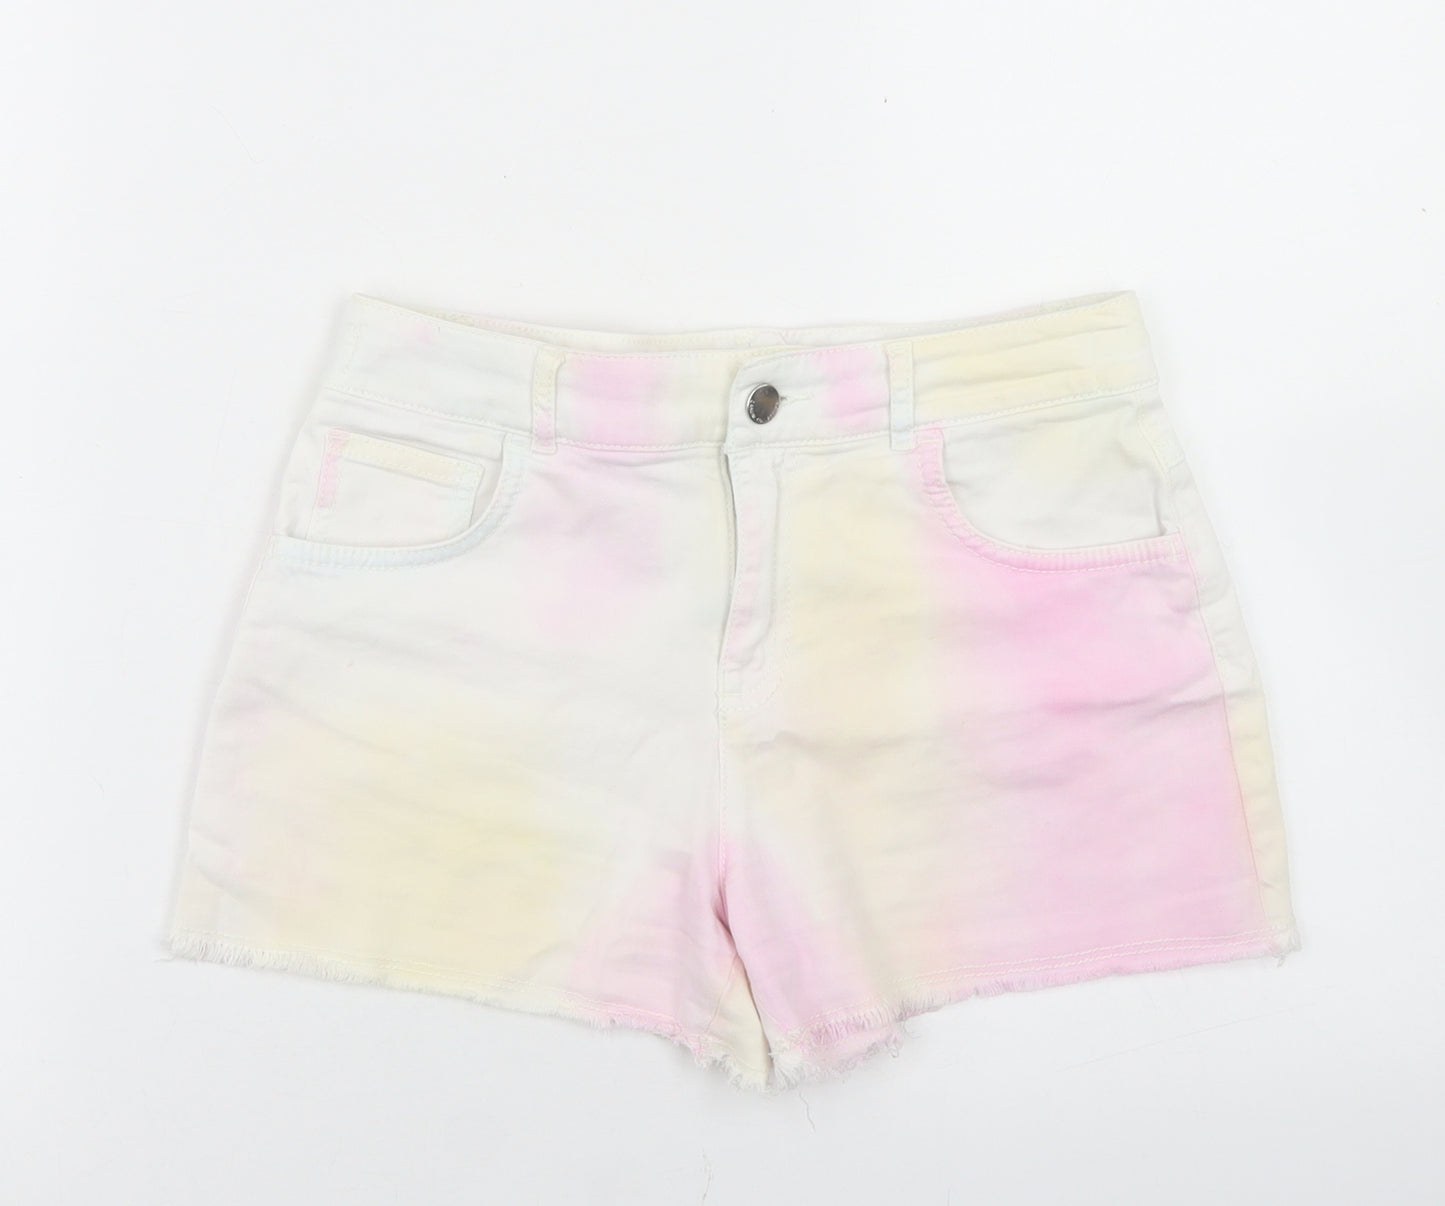 F&F Girls Multicoloured  Cotton Mom Shorts Size 12-13 Years  Regular Zip - Tie Dye